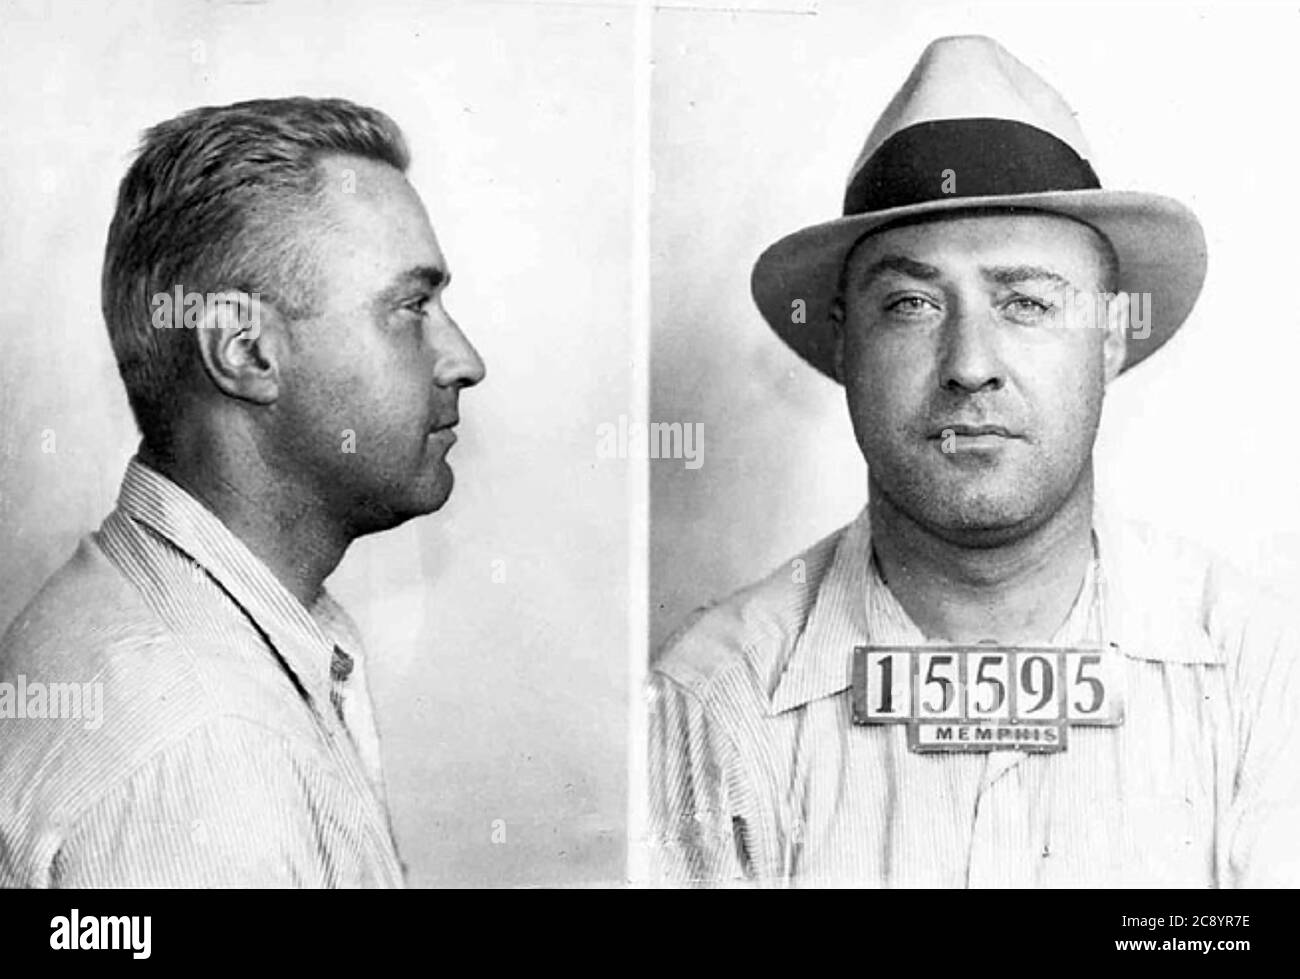 GEORGE 'MACHINES GUN' KELLY BARNES (1895-1954) amerikanischer Gangster in Memphis Police Department Fotos Stockfoto